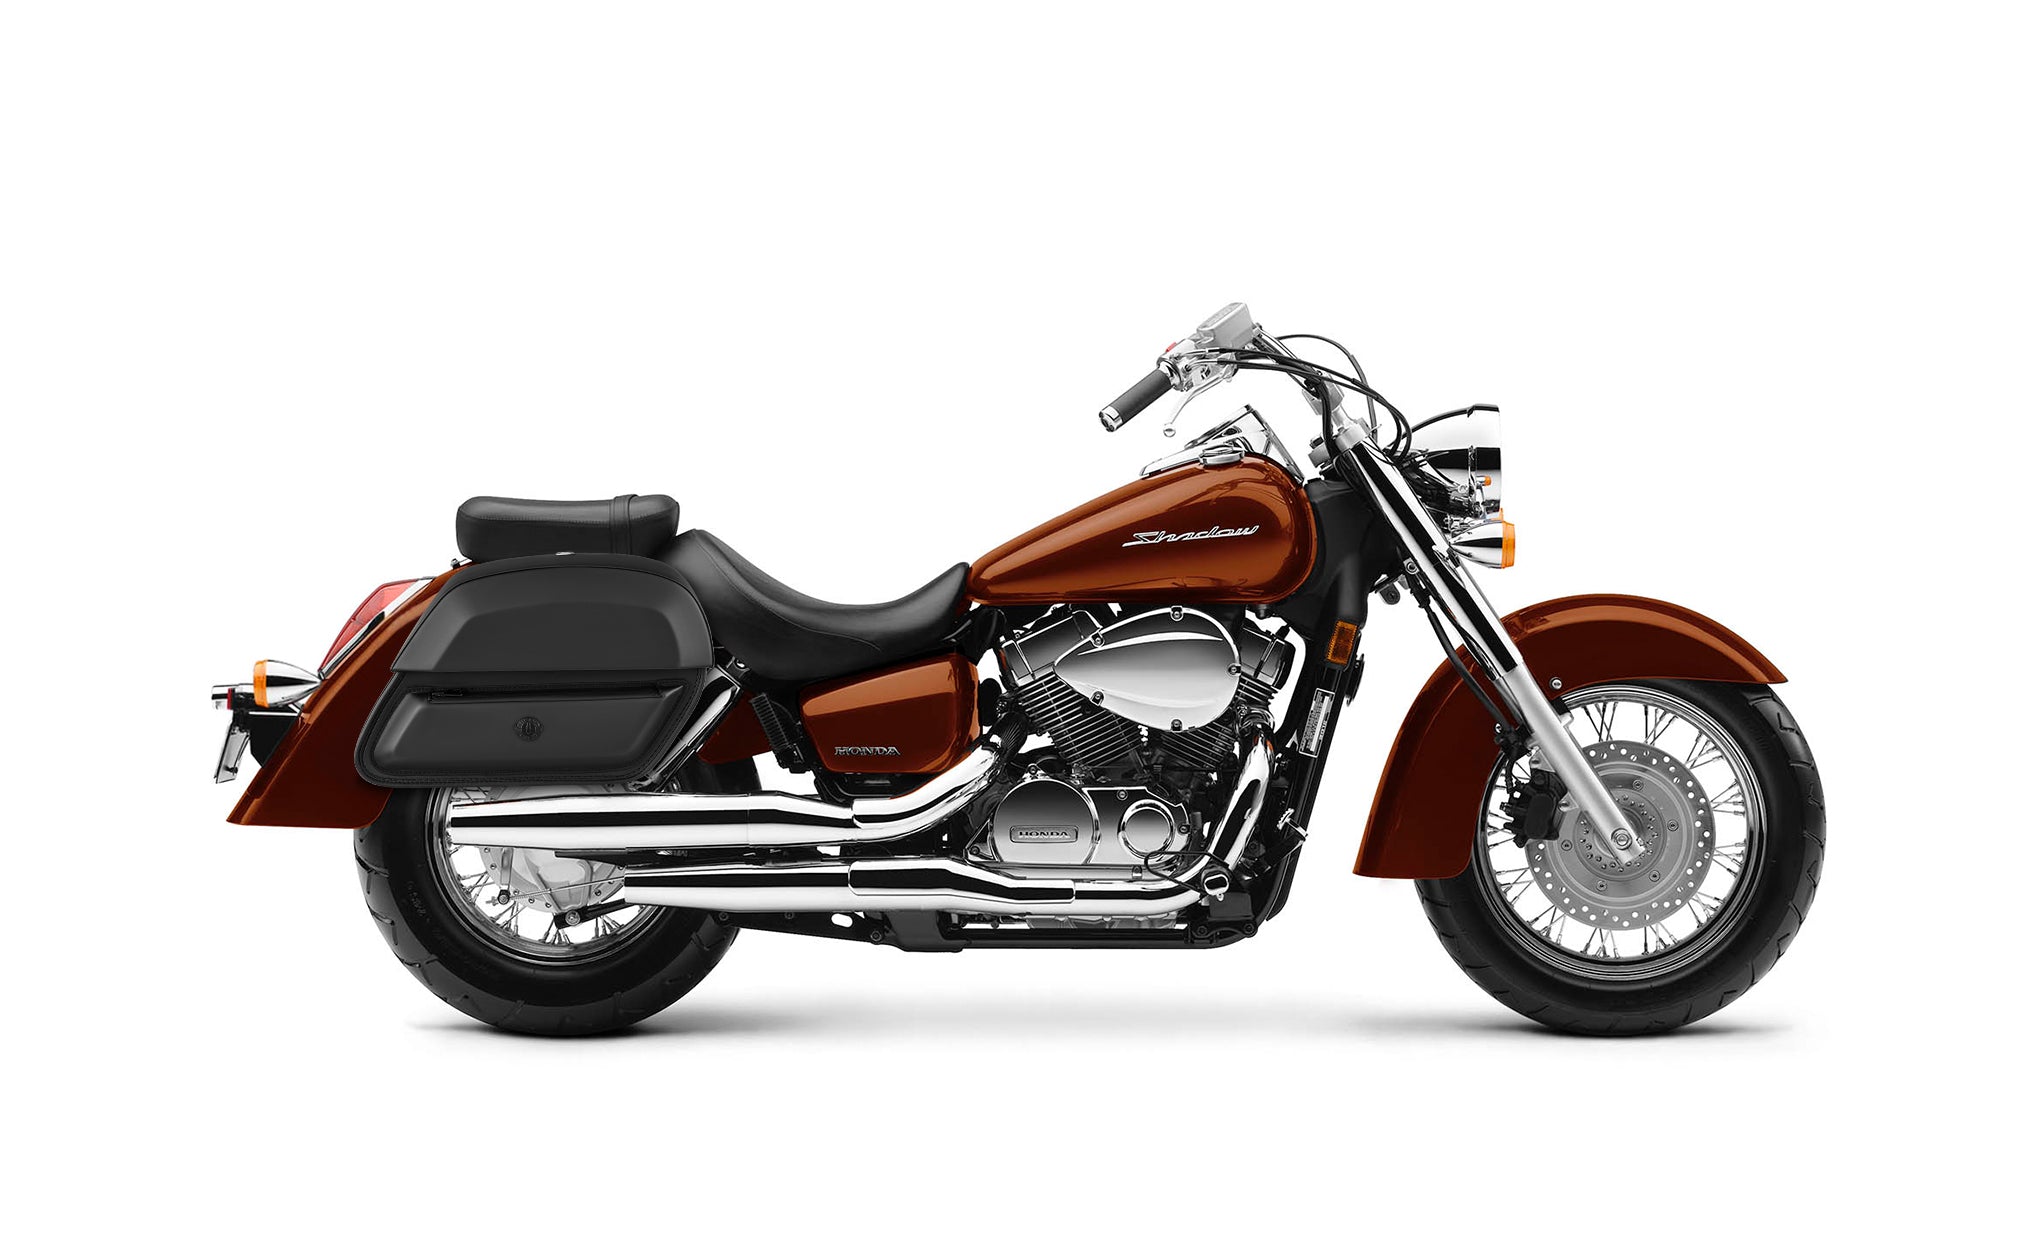 28L - Wraith Medium Shadow 1100 Aero Leather Motorcycle Saddlebags BAG on Bike View @expand